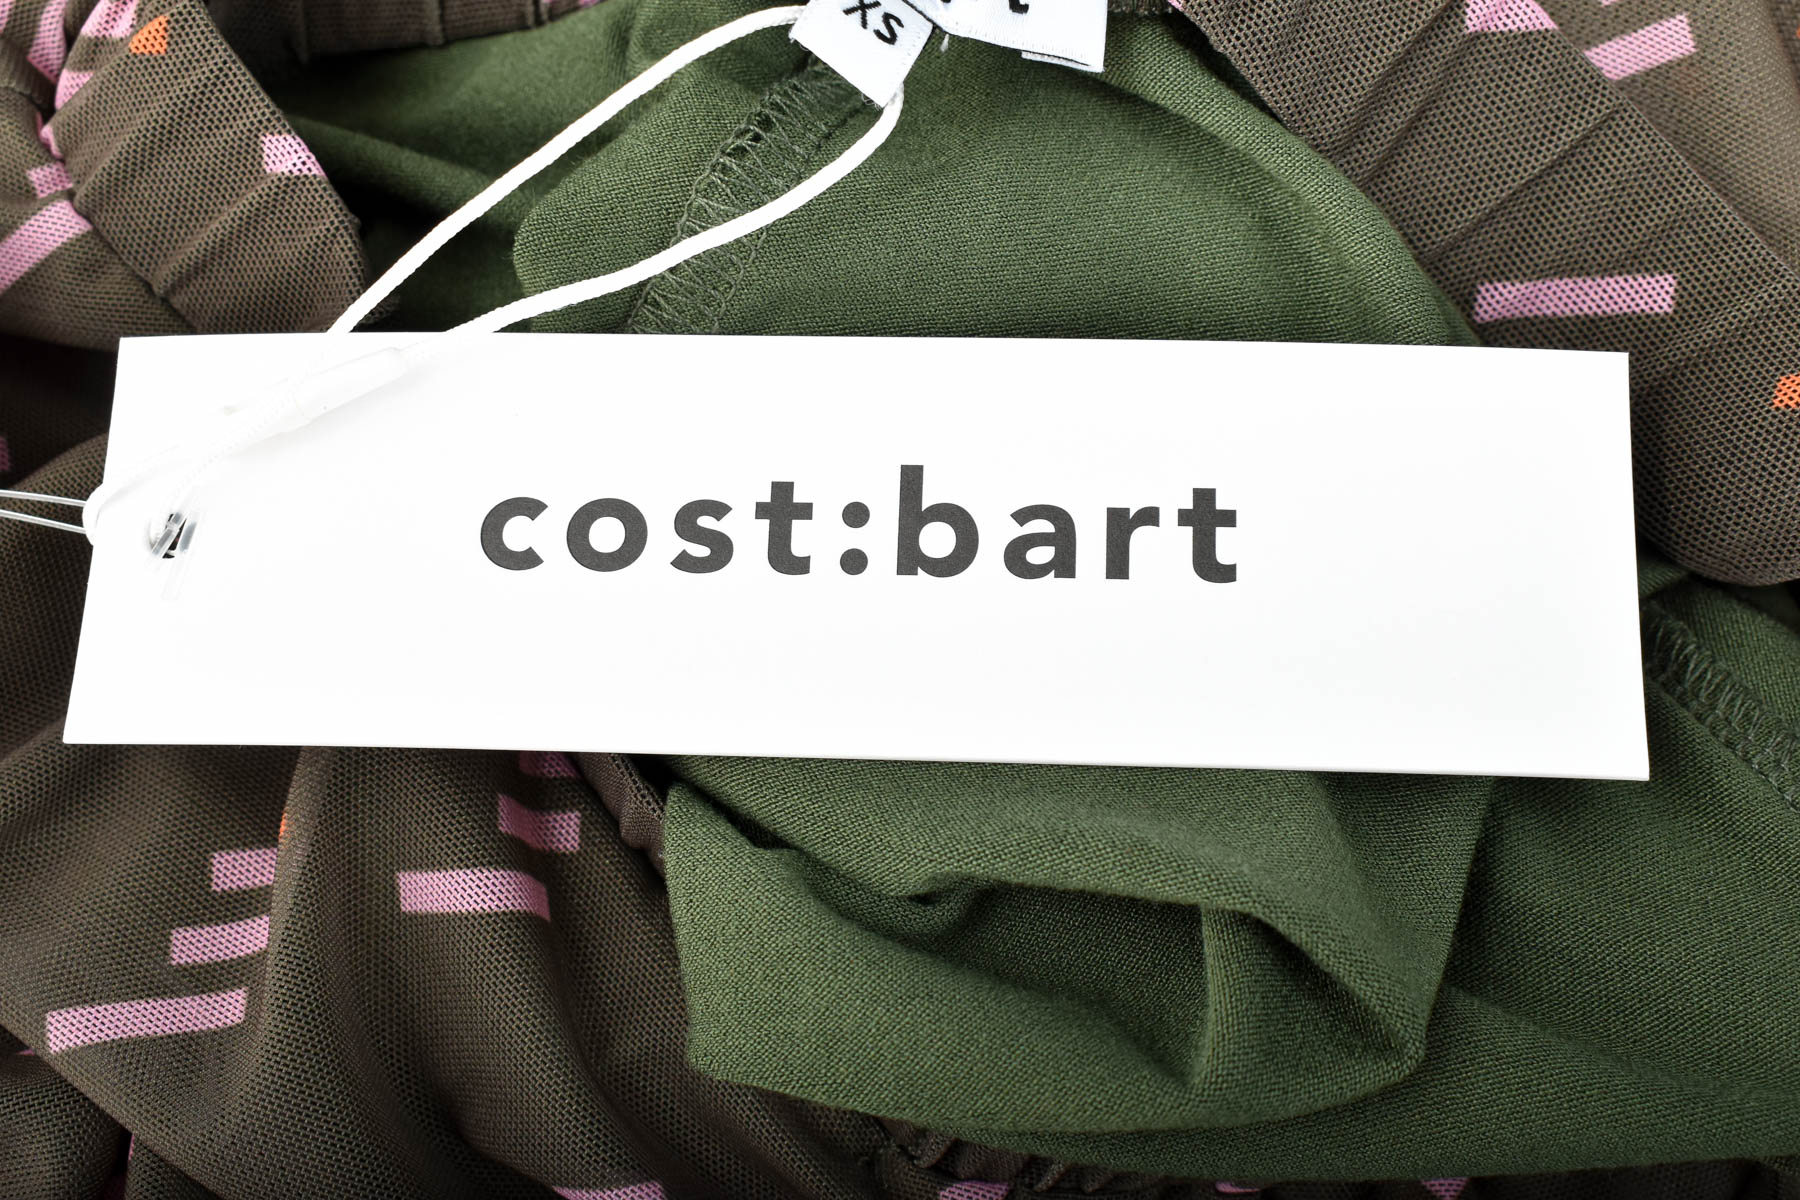 Girls' skirts - Cost:bart - 2